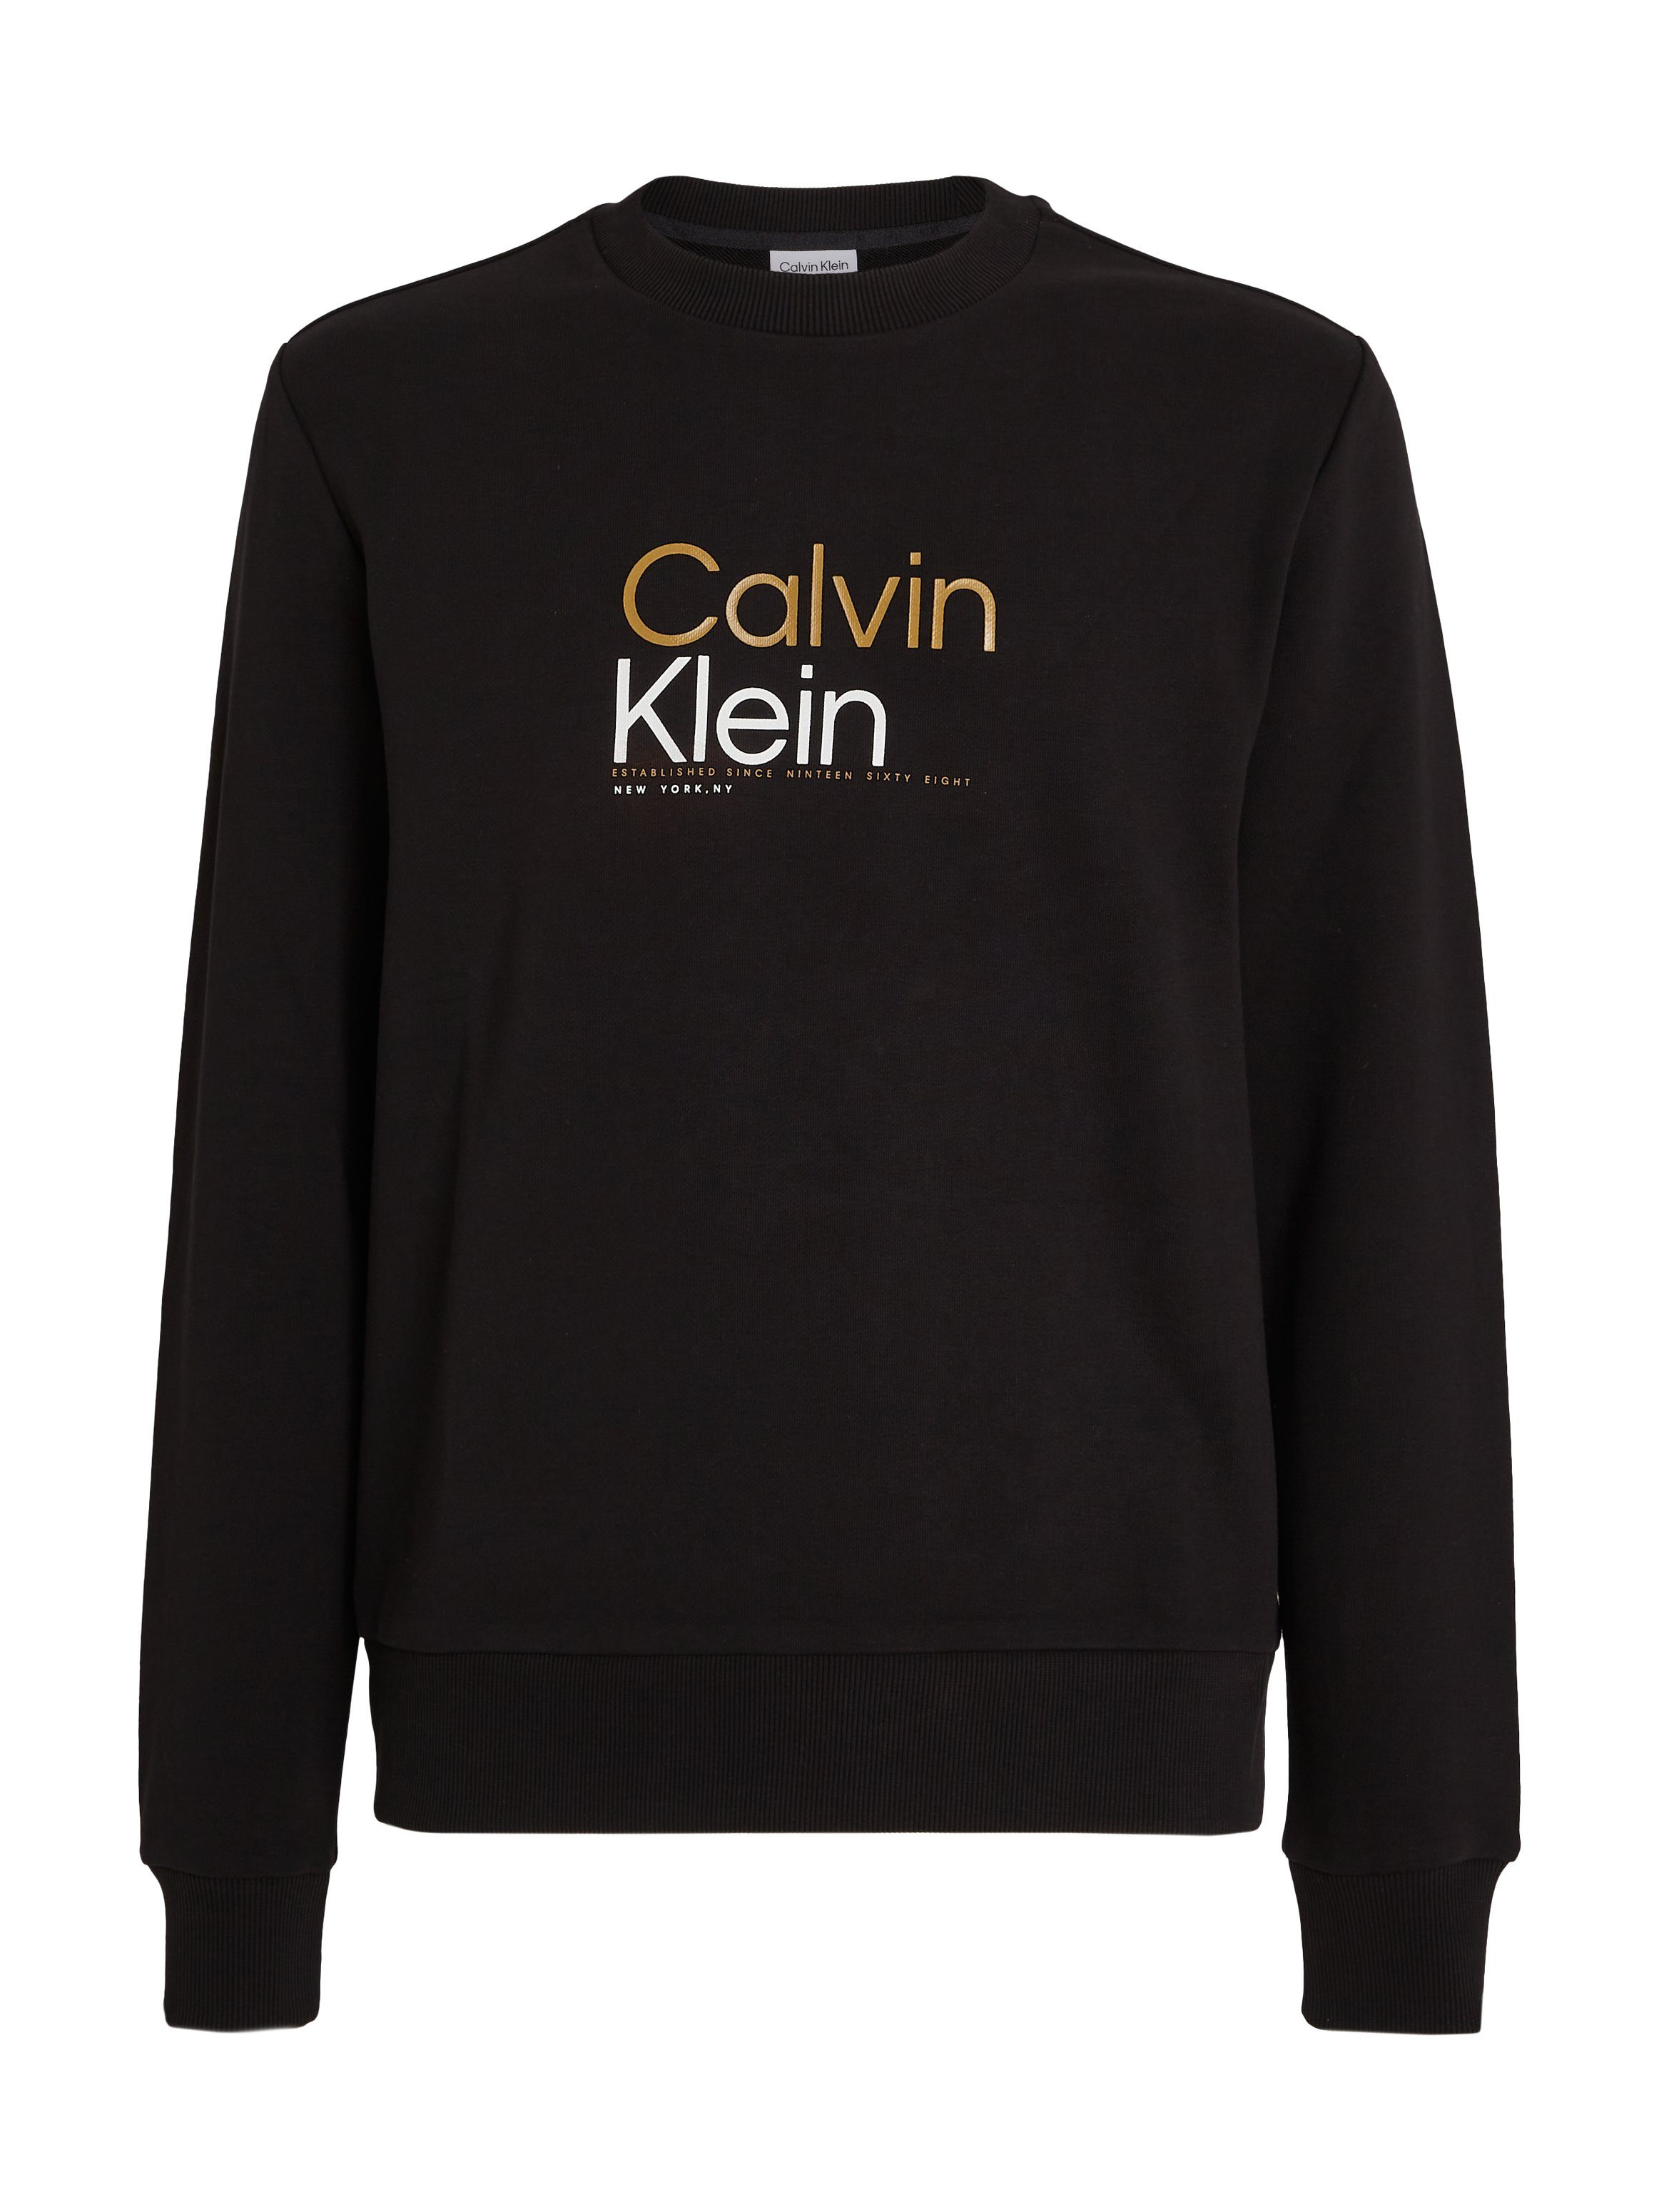 SWEATSHIRT LOGO Calvin mit Markenlabel Klein COLOR MULTI Black Ck Sweatshirt